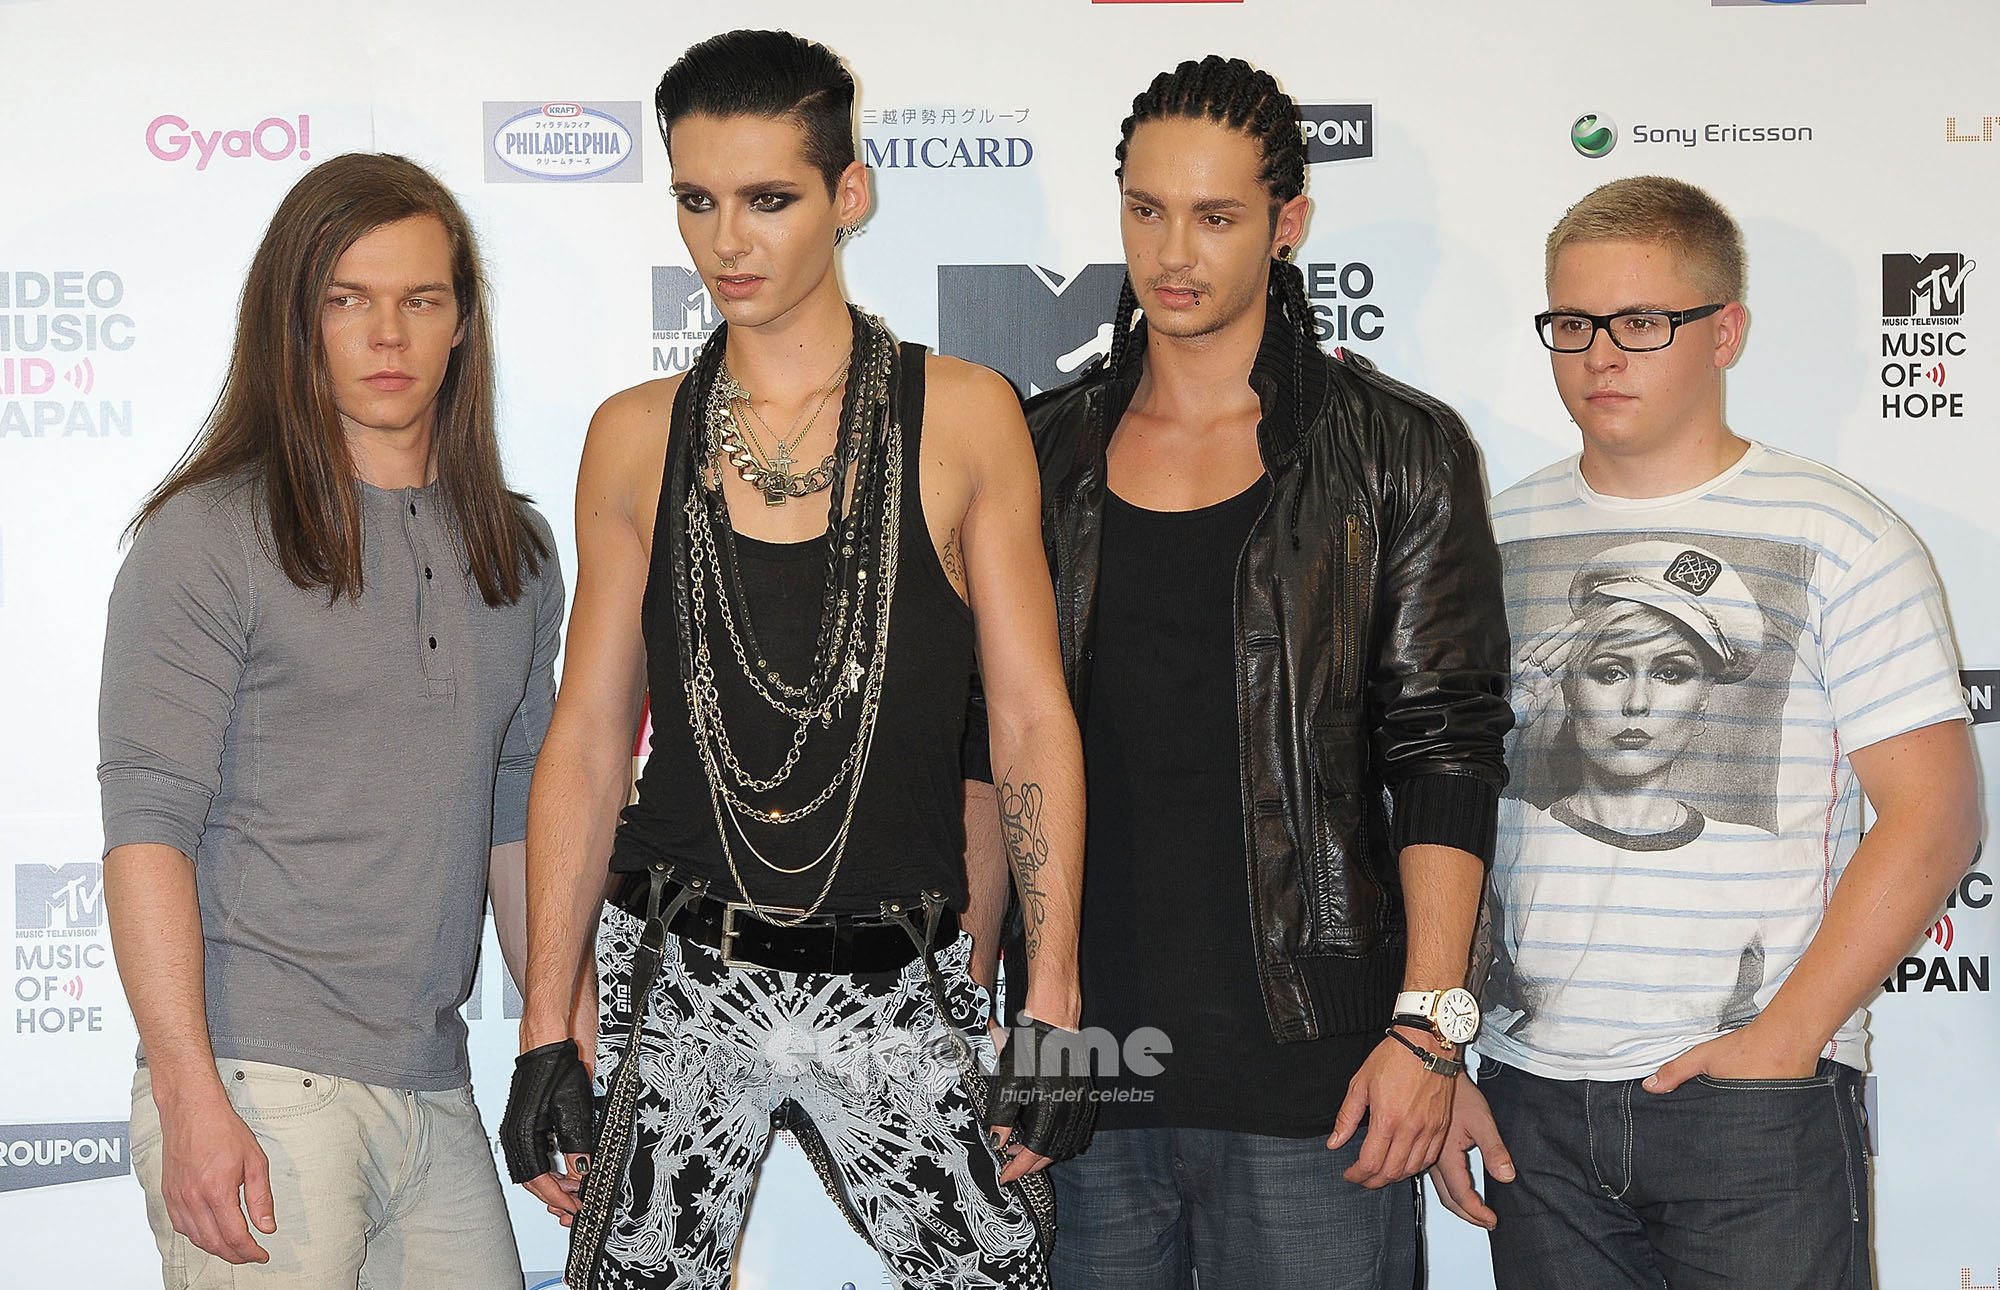 Tokio Hotel: Band of the Year 2007, Award-winners, Rock stars. 2000x1290 HD Background.